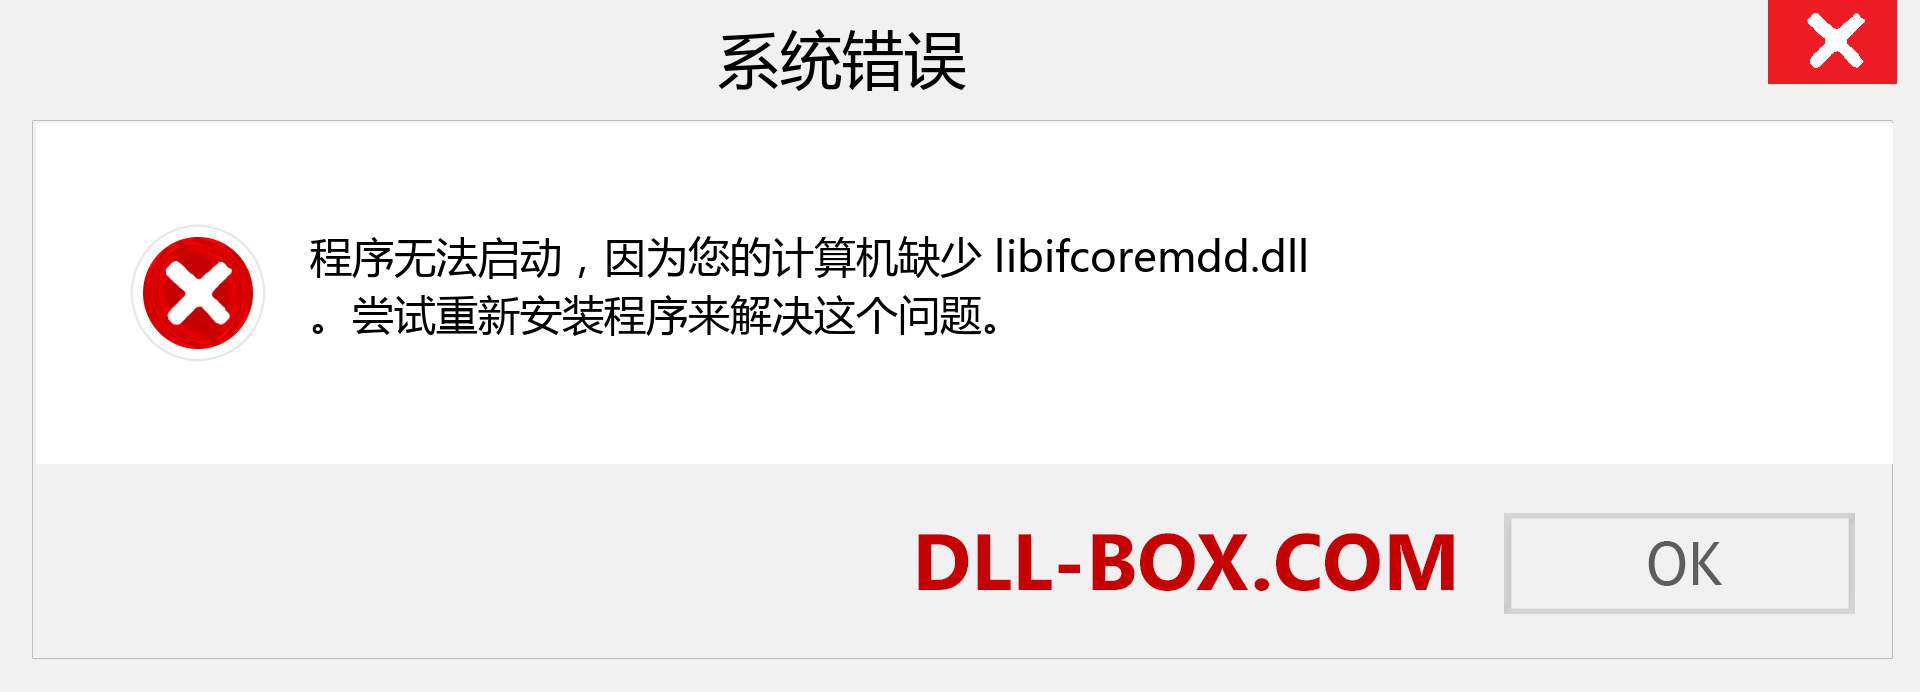 libifcoremdd.dll 文件丢失？。 适用于 Windows 7、8、10 的下载 - 修复 Windows、照片、图像上的 libifcoremdd dll 丢失错误